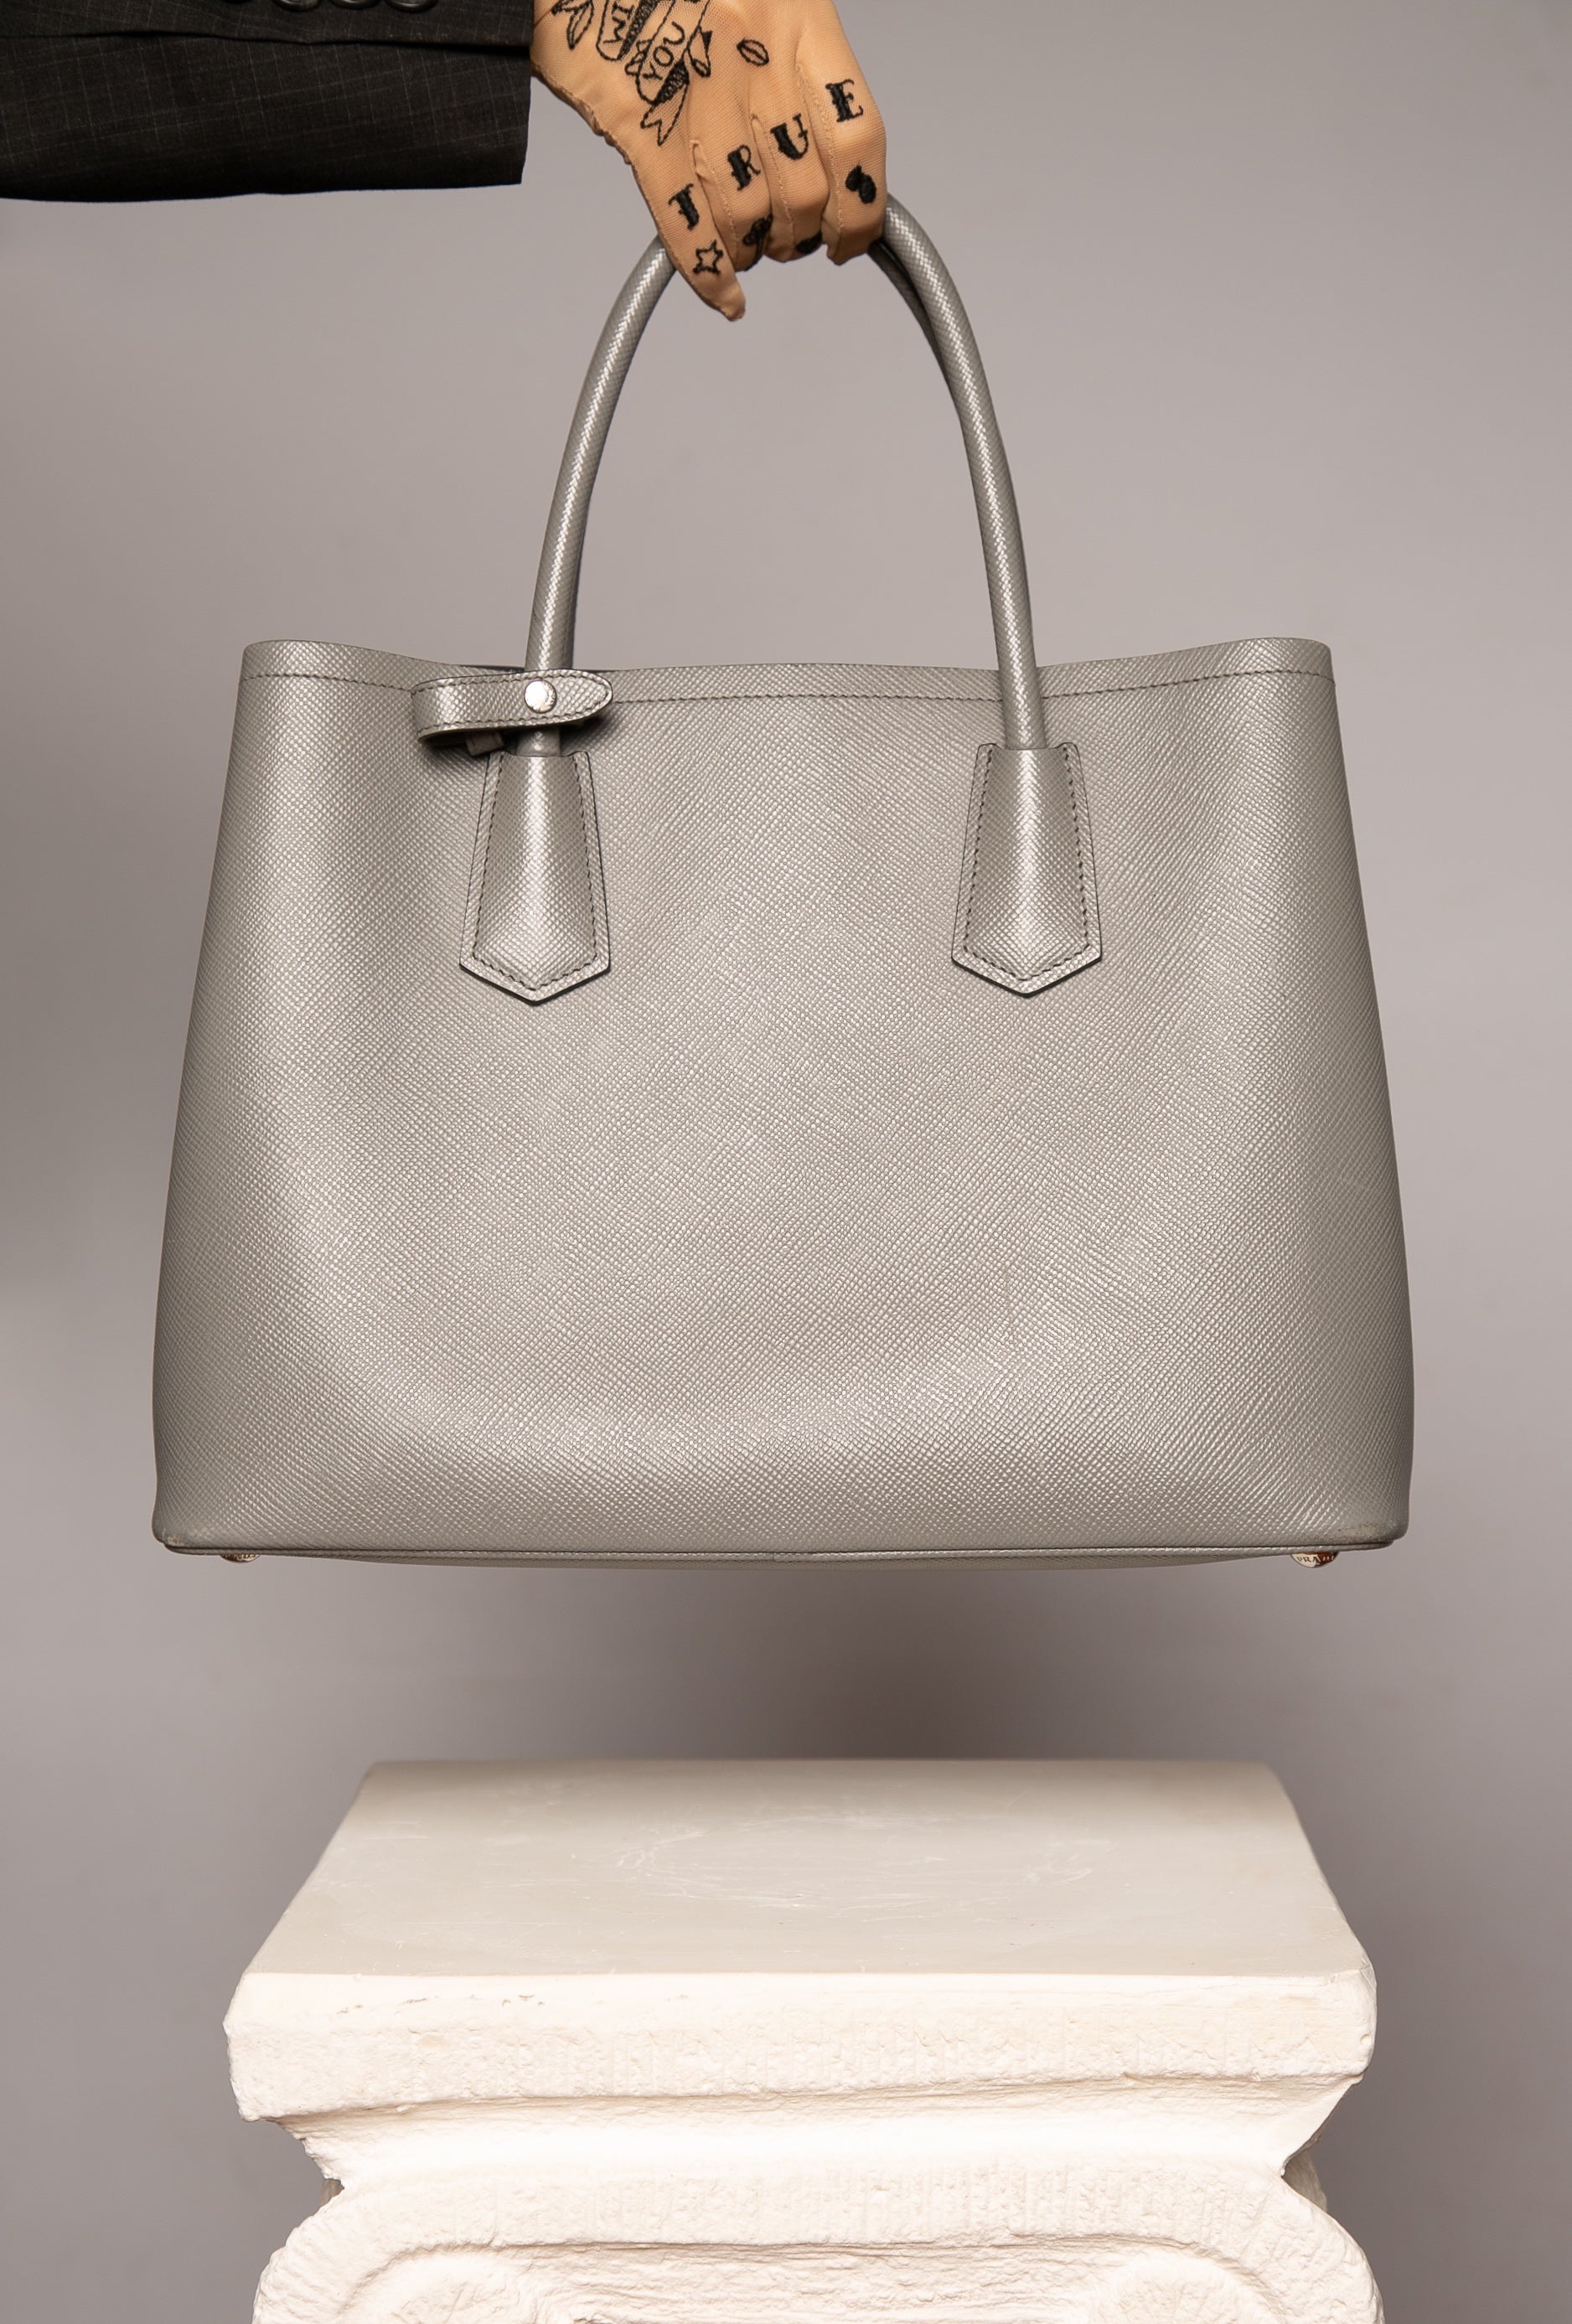 Prada Saffiano Cuir Double Bag - ShopStyle